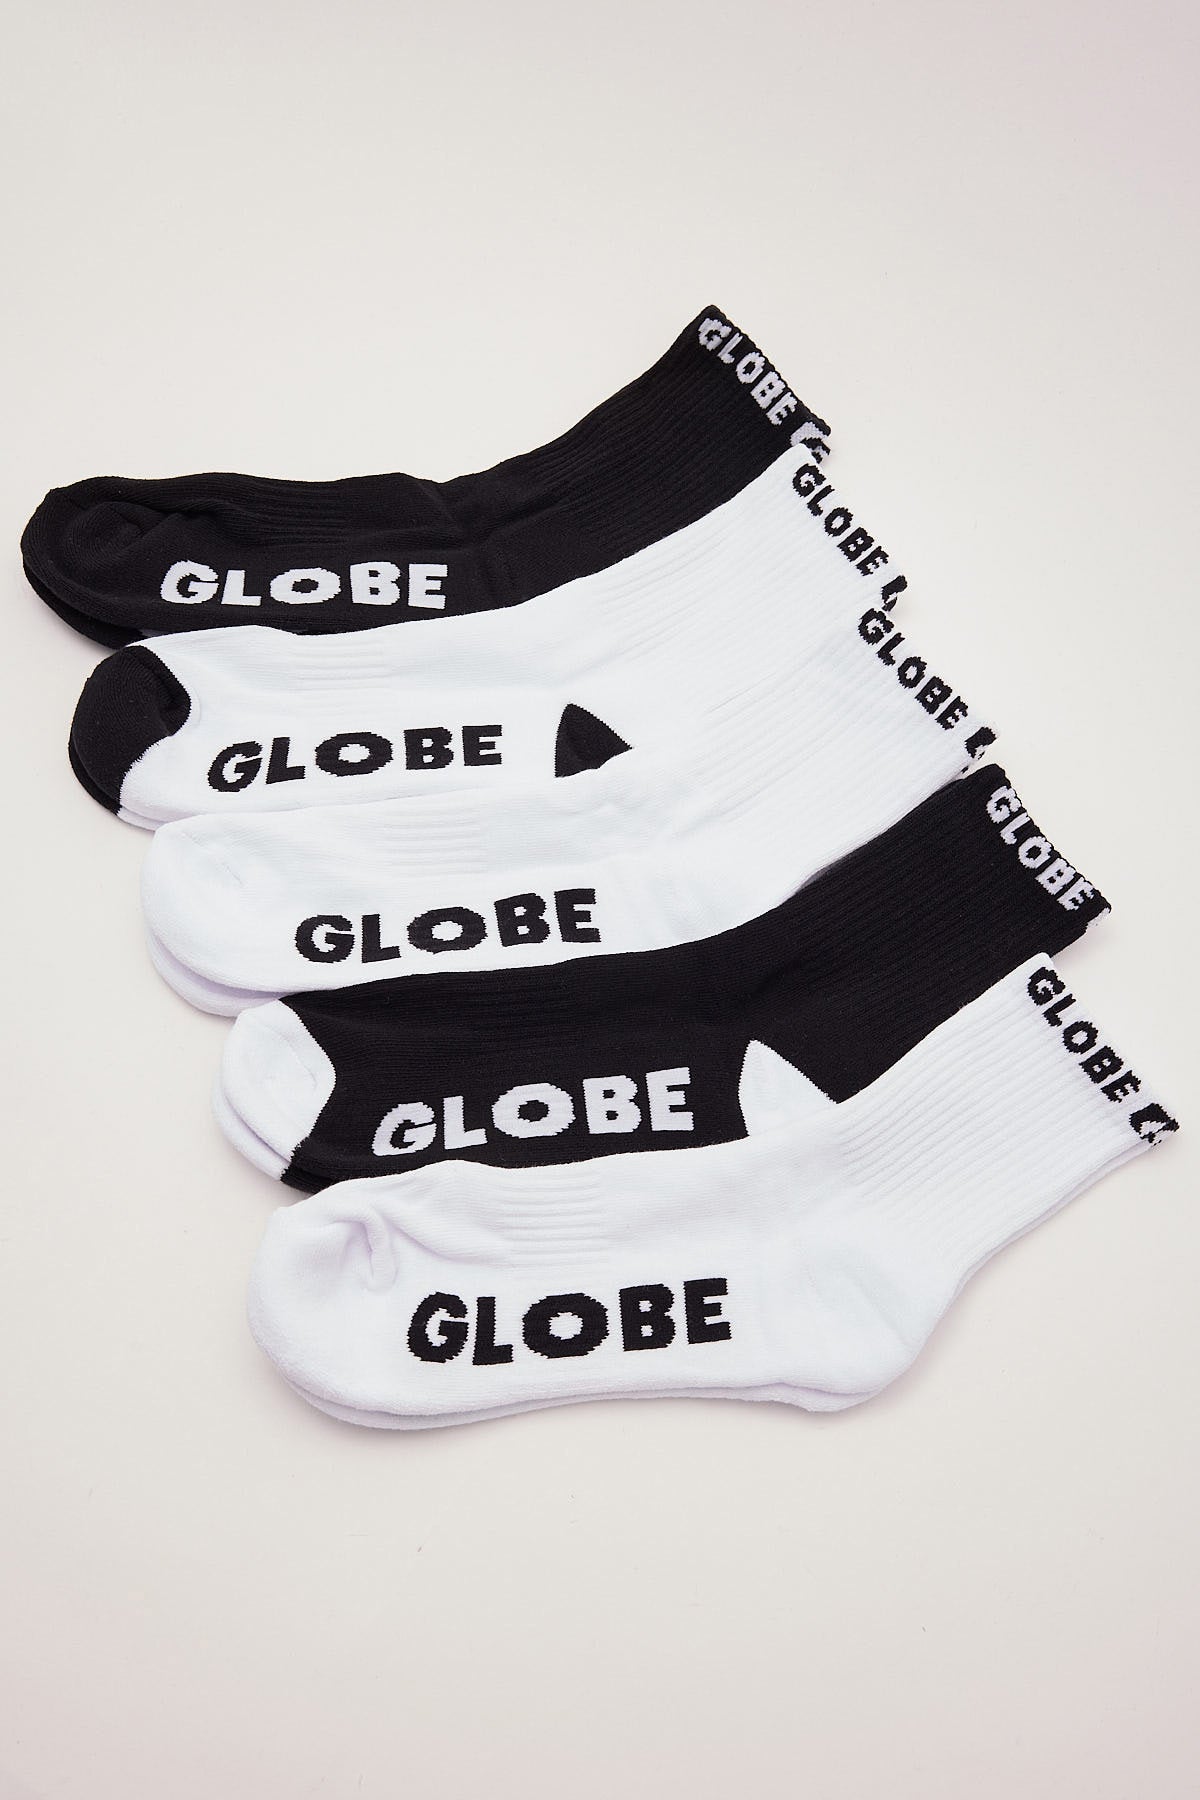 Globe Quater Sock 5pk Black/White